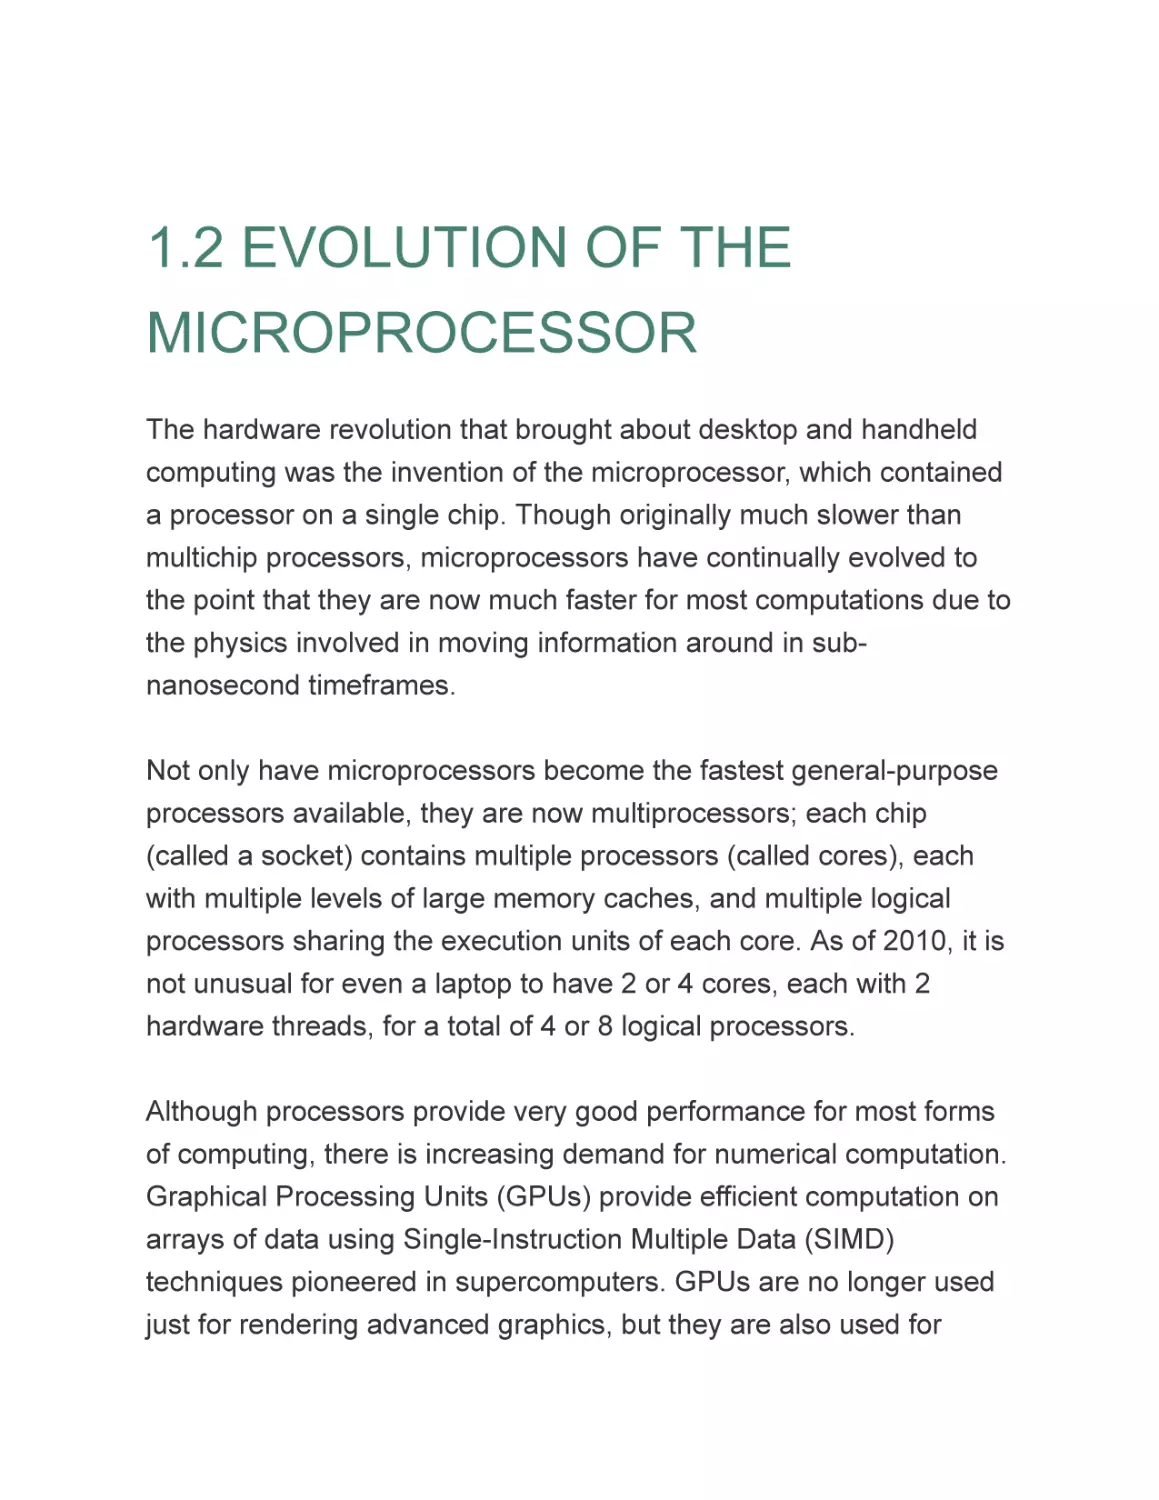 1.2 EVOLUTION OF THE MICROPROCESSOR